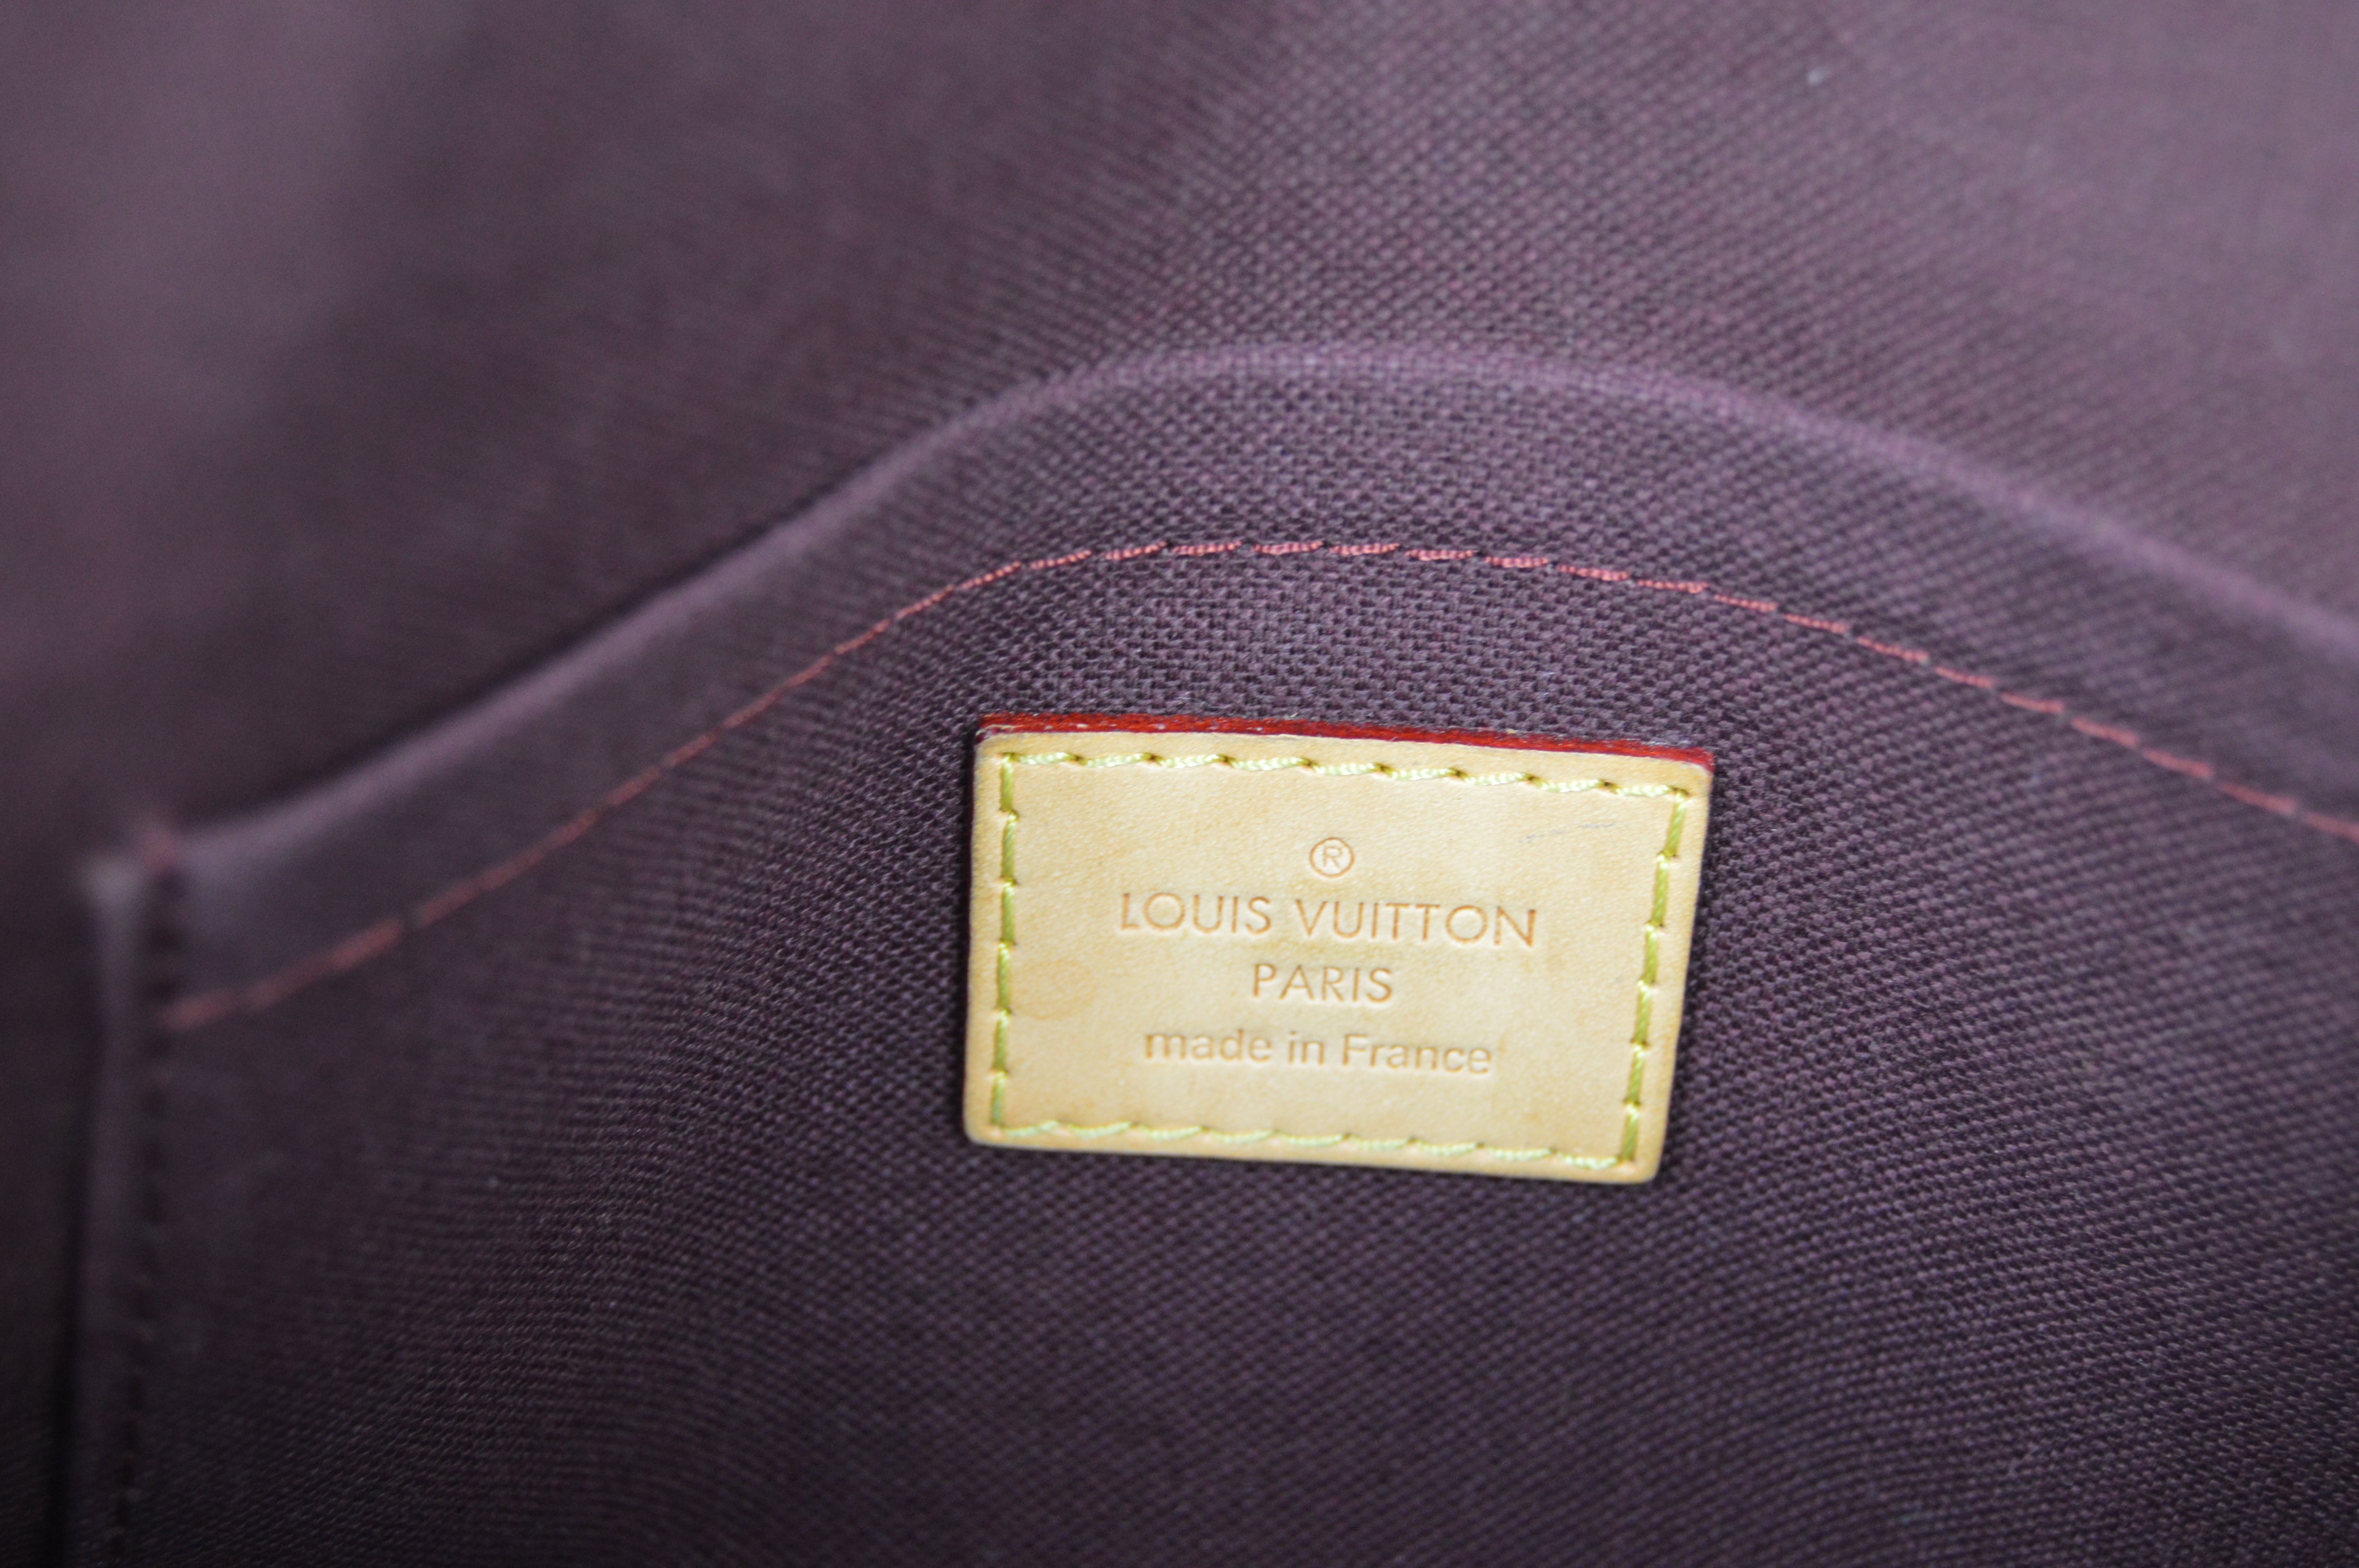 Louis Vuitton Monogram Favorite PM (Discontinued)